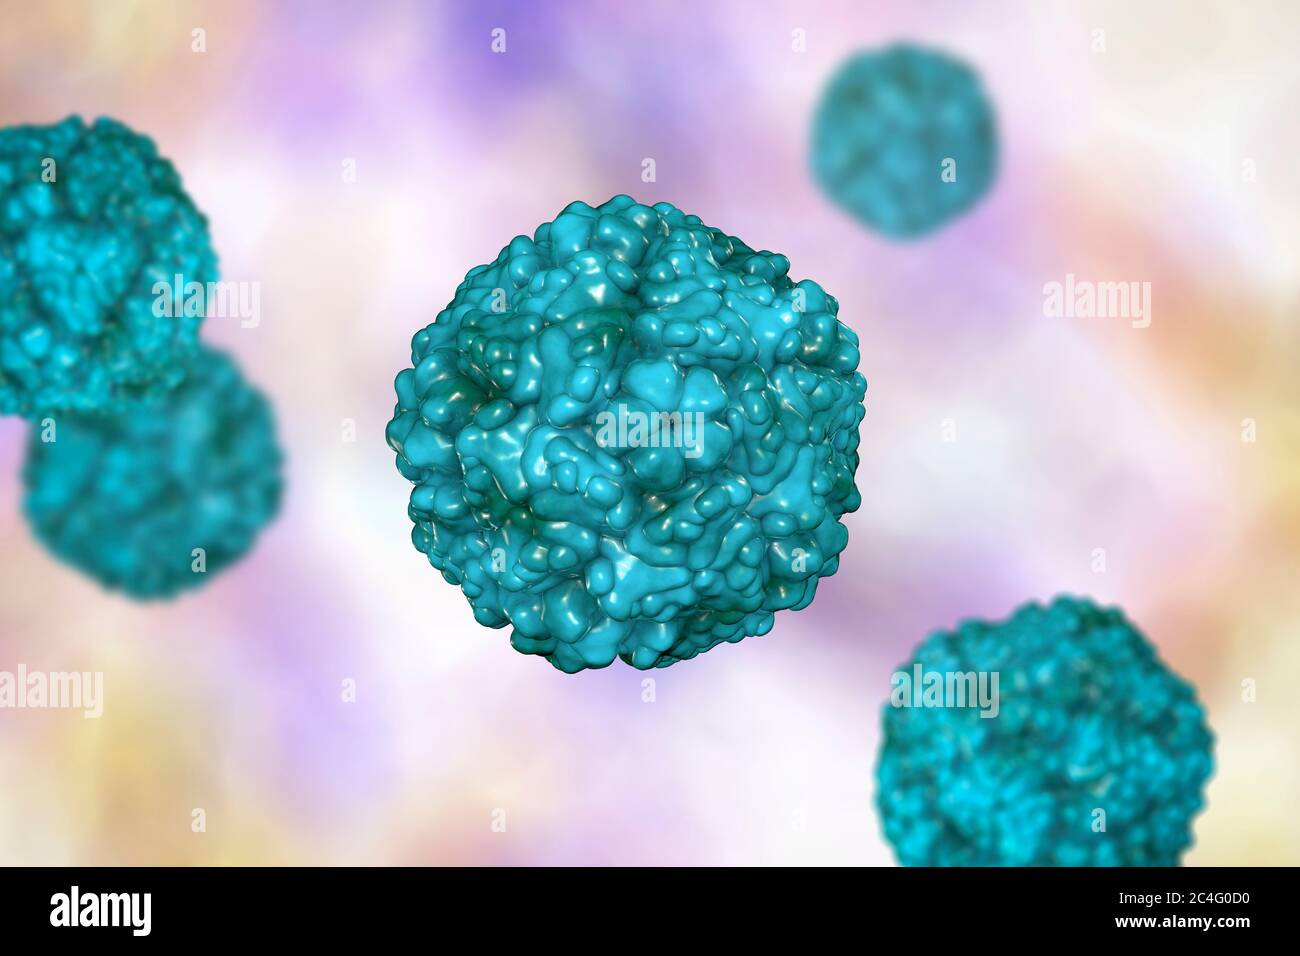 Enteroviruses, computer illustration. Enterovirus is a genus of positive-sense RNA viruses of the family Picornaviridae. They were originally classifi Stock Photo